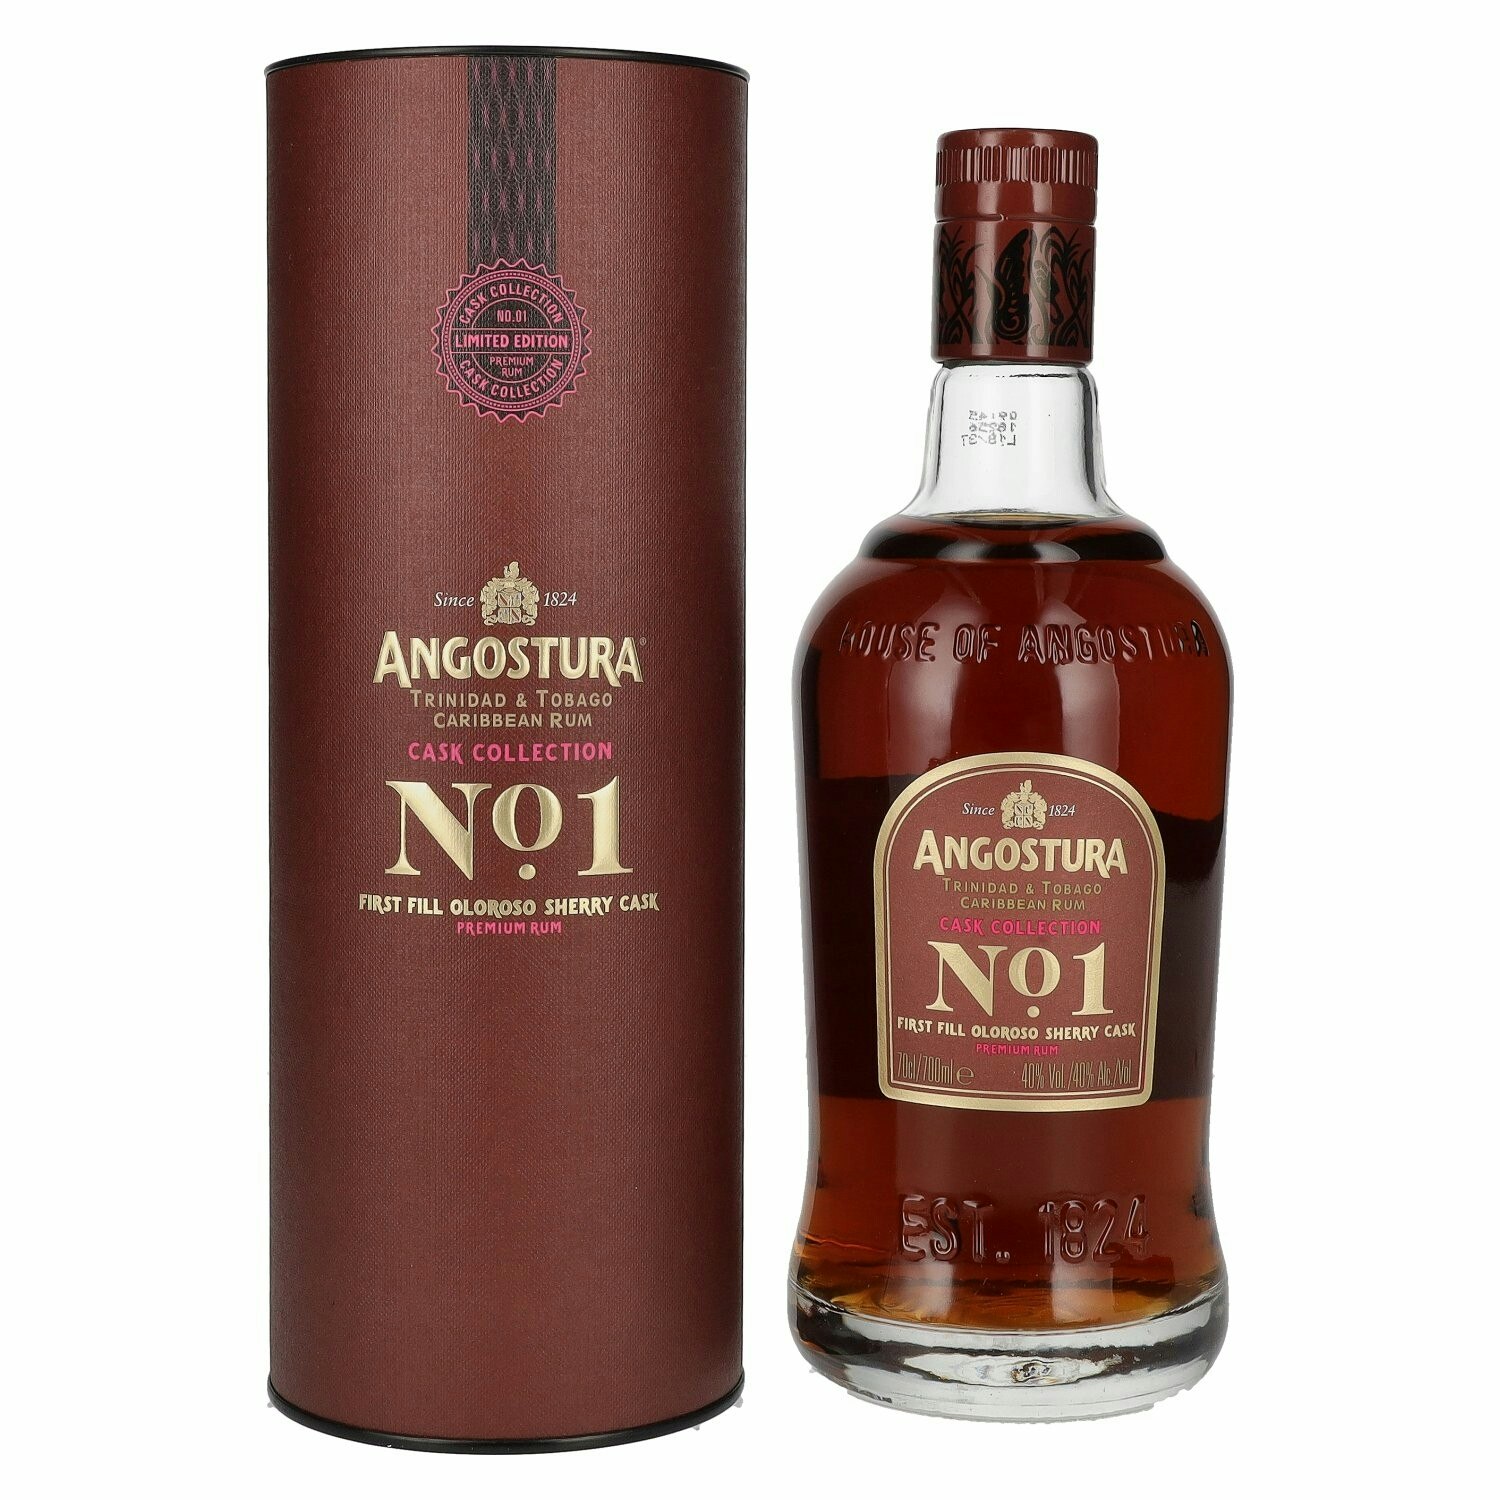 Angostura No. 1 CASK COLLECTION First Fill Oloroso Sherry Cask Premium Rum 40% Vol. 0,7l in Giftbox